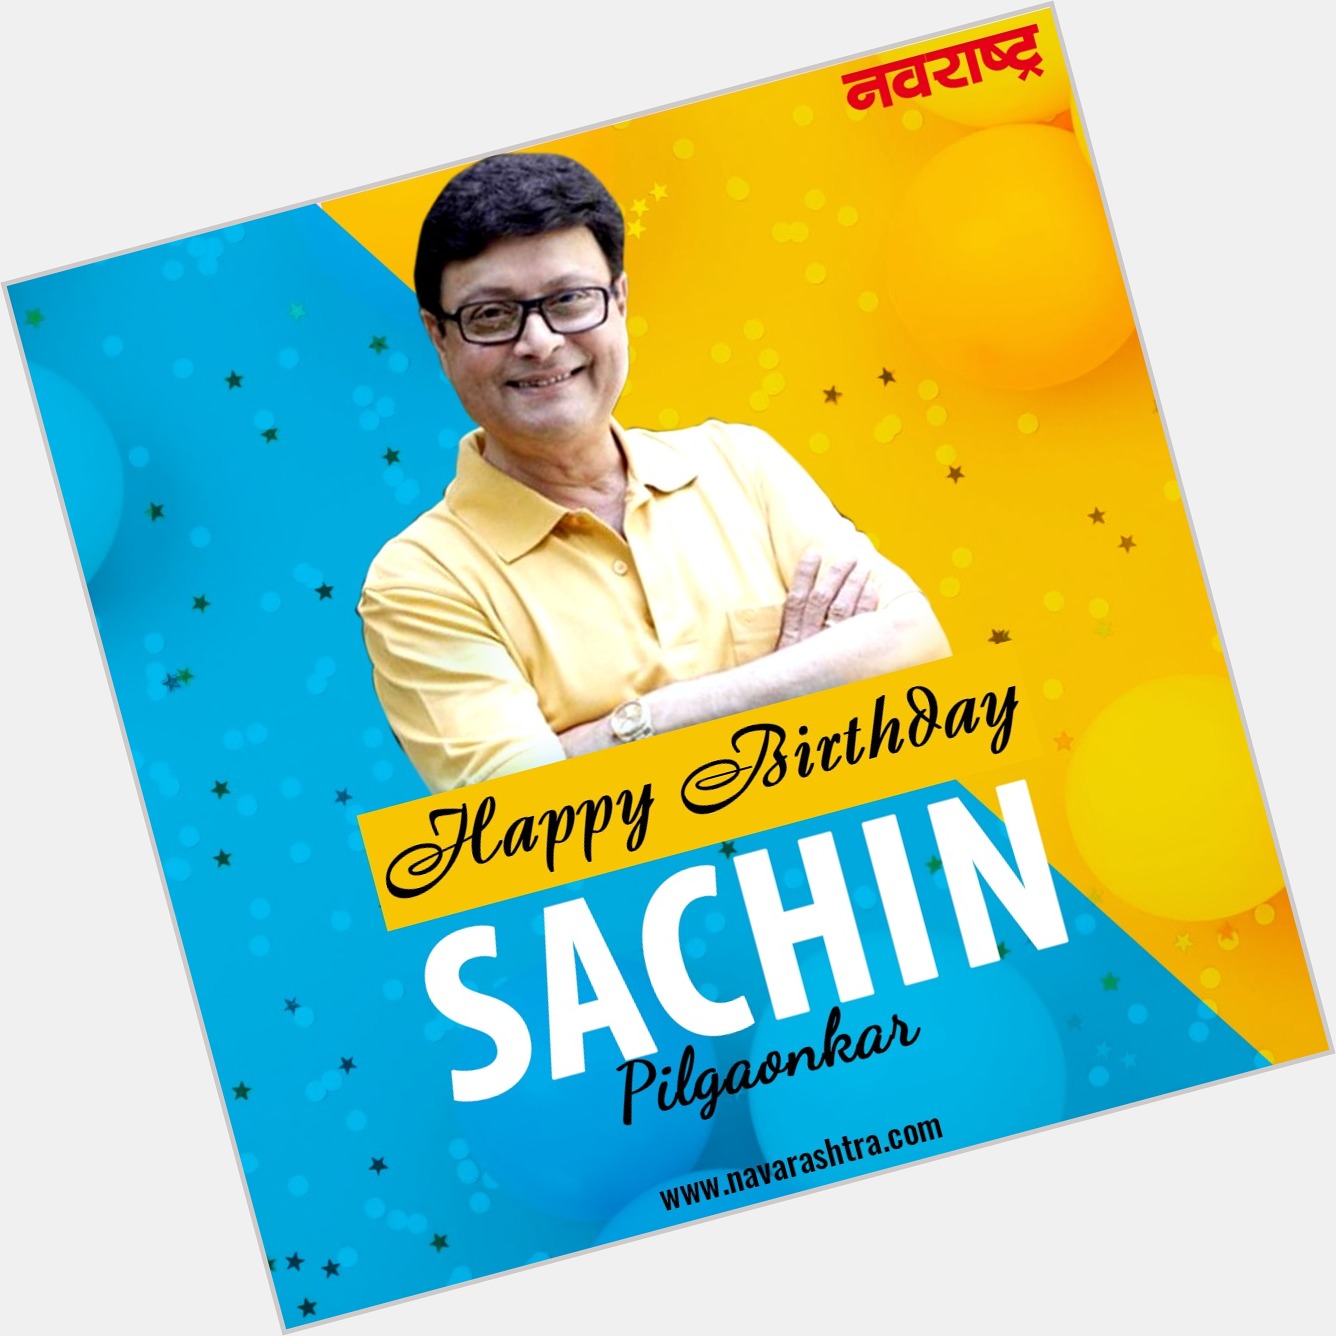  Wishes Him, Happy Birthday 
Sachin Pilgaonkar  